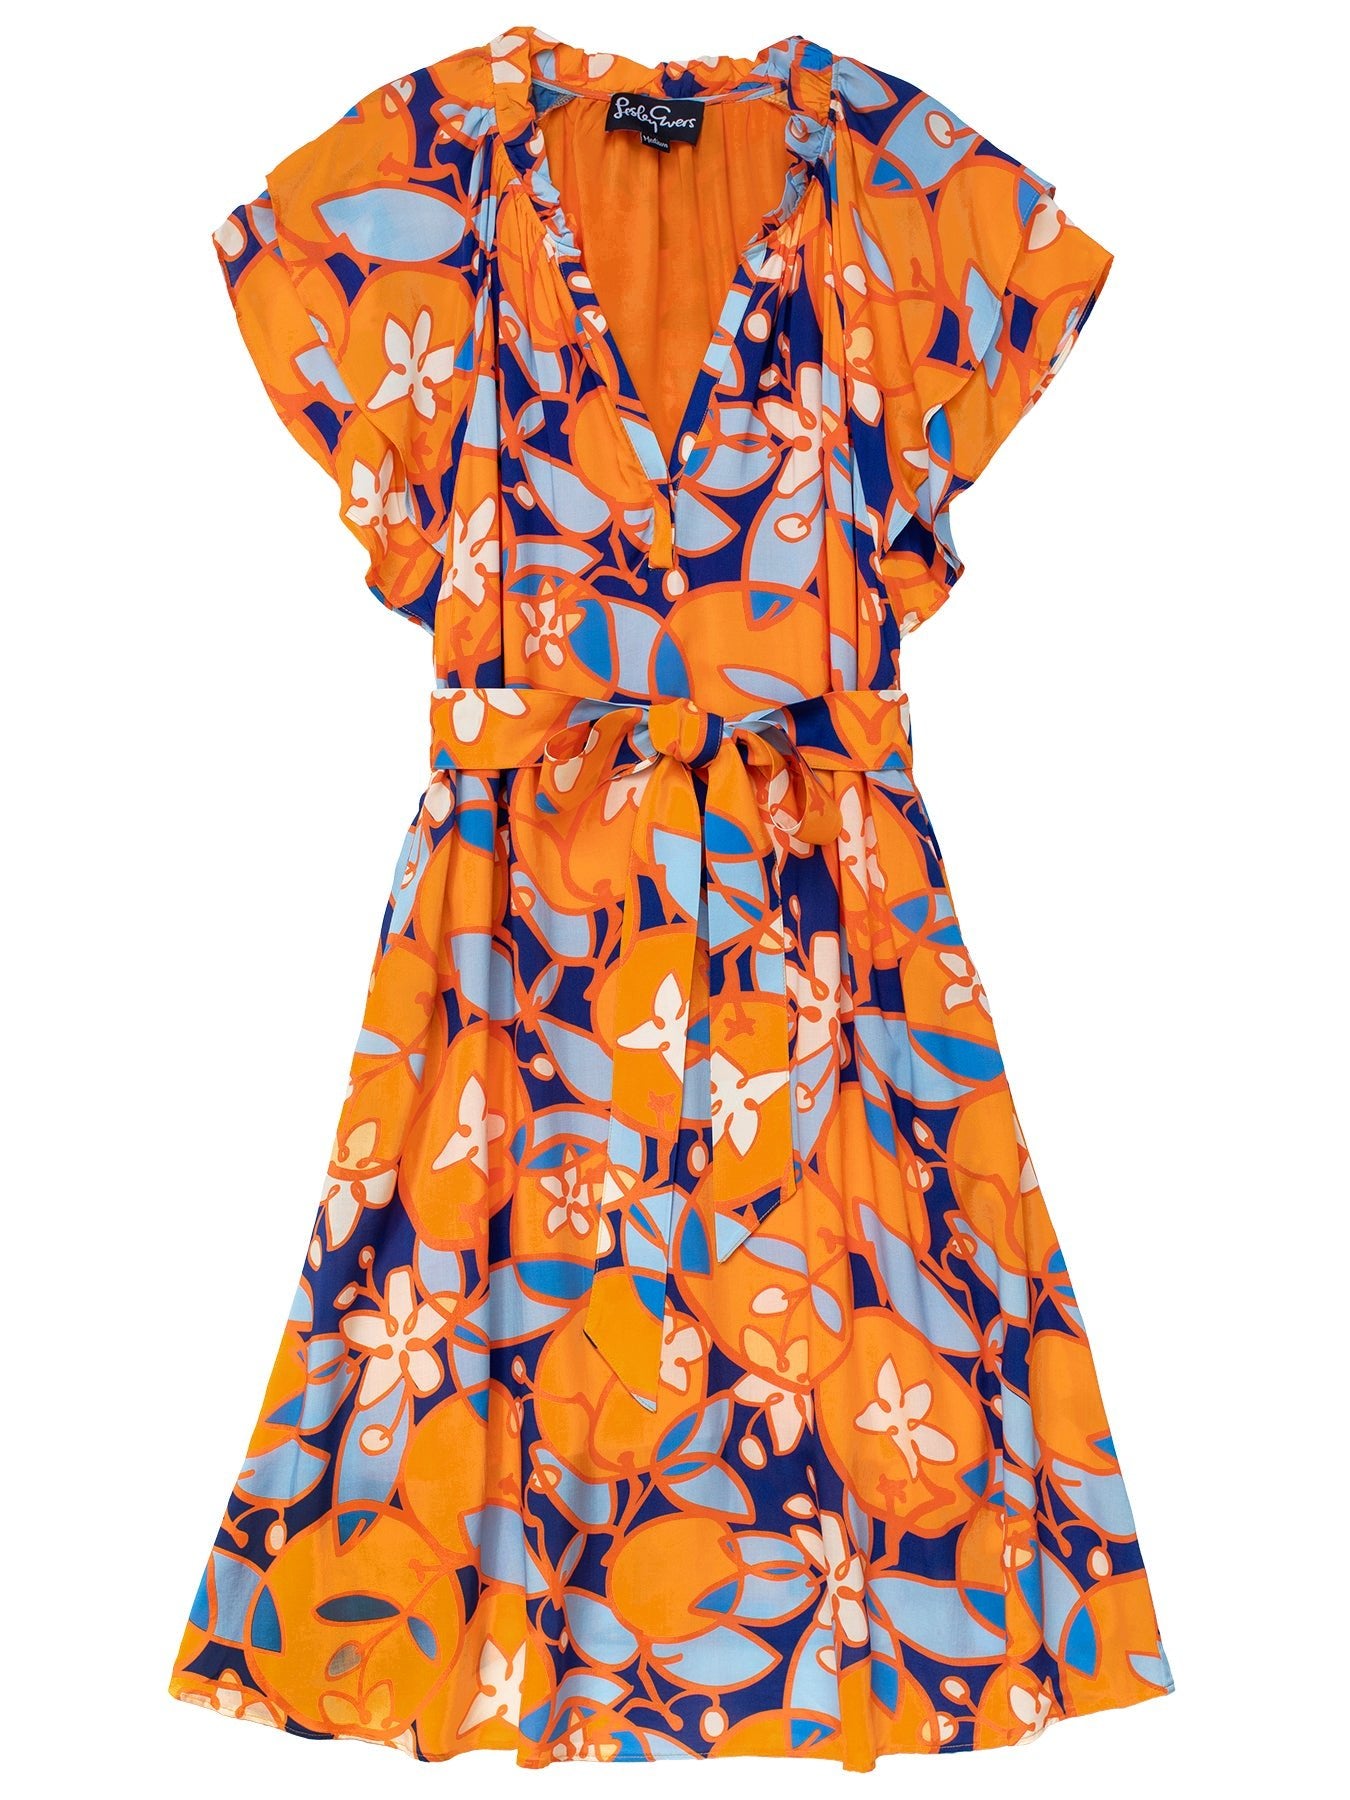 MATILDA Orange Blossom - Lesley Evers - ARDEN - Dress - Knee Length Dress